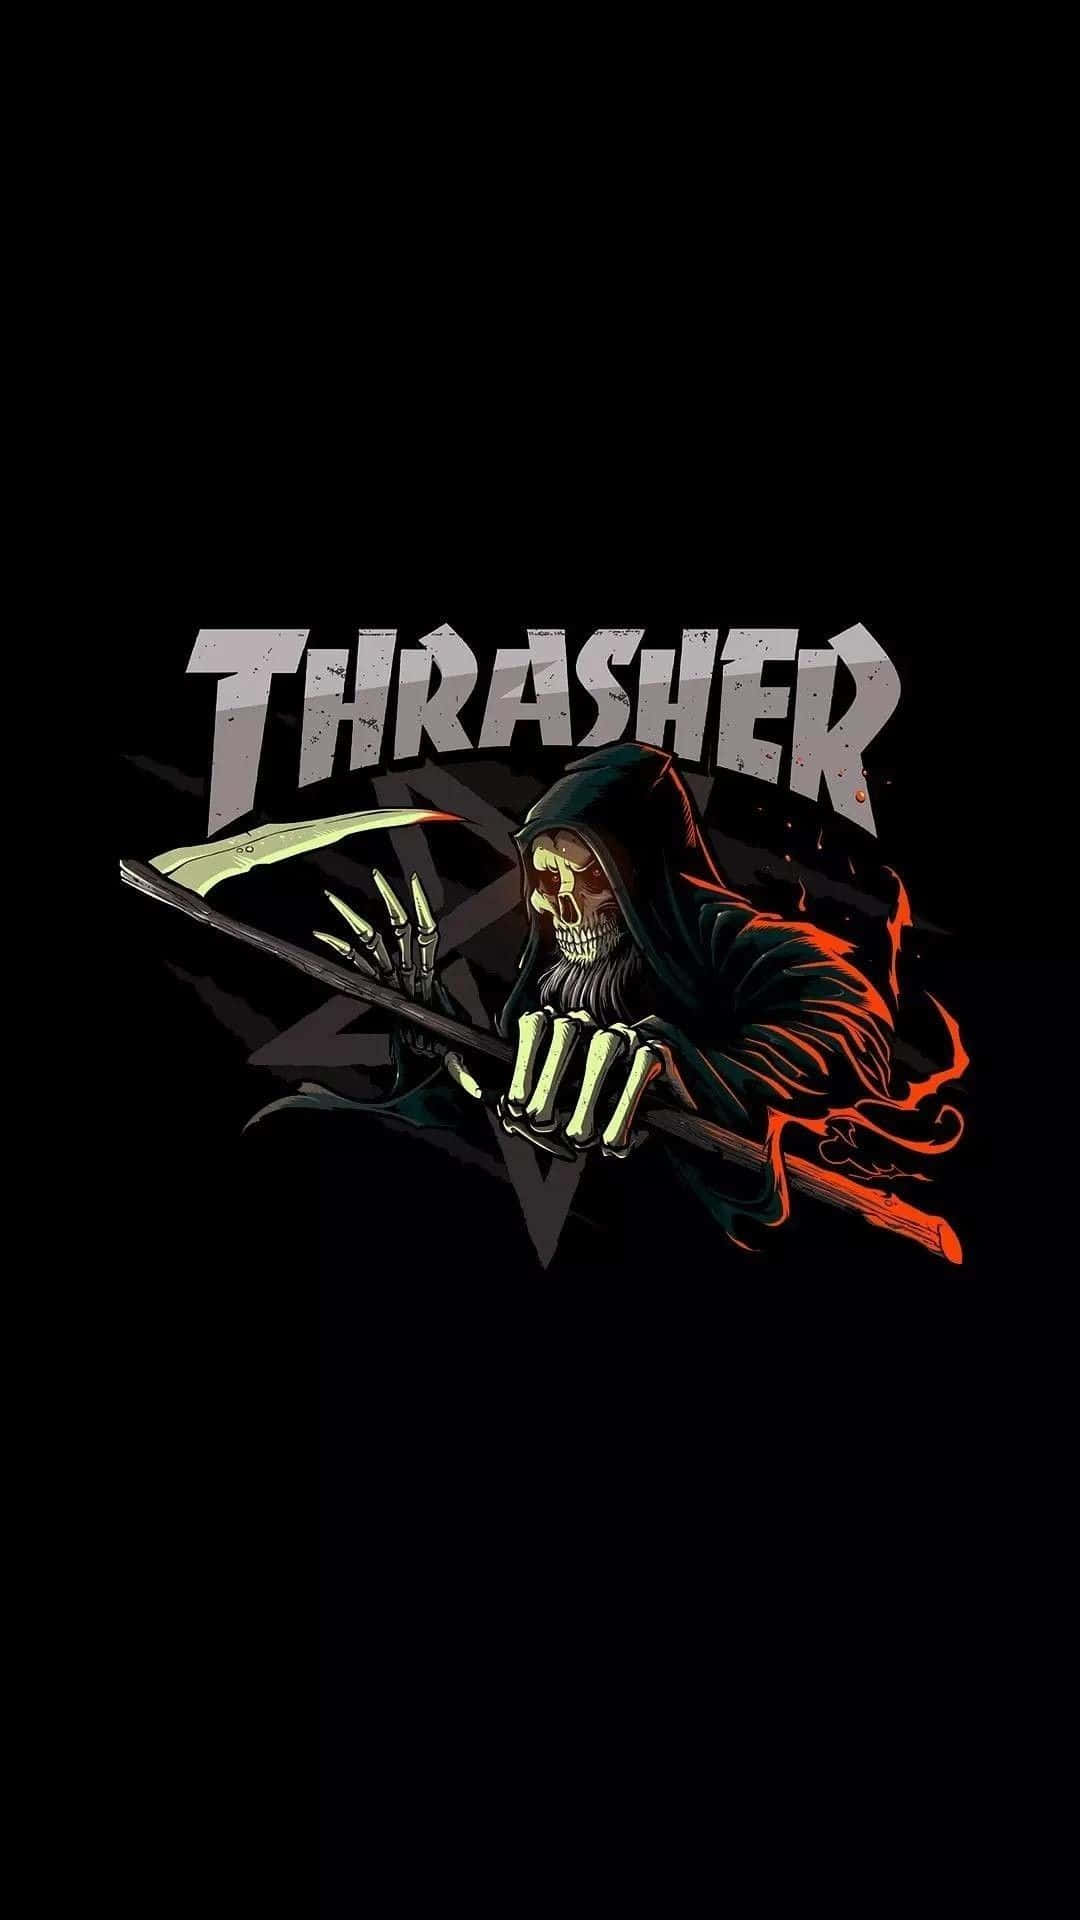 Thrasher Logo On A Black Background Wallpaper